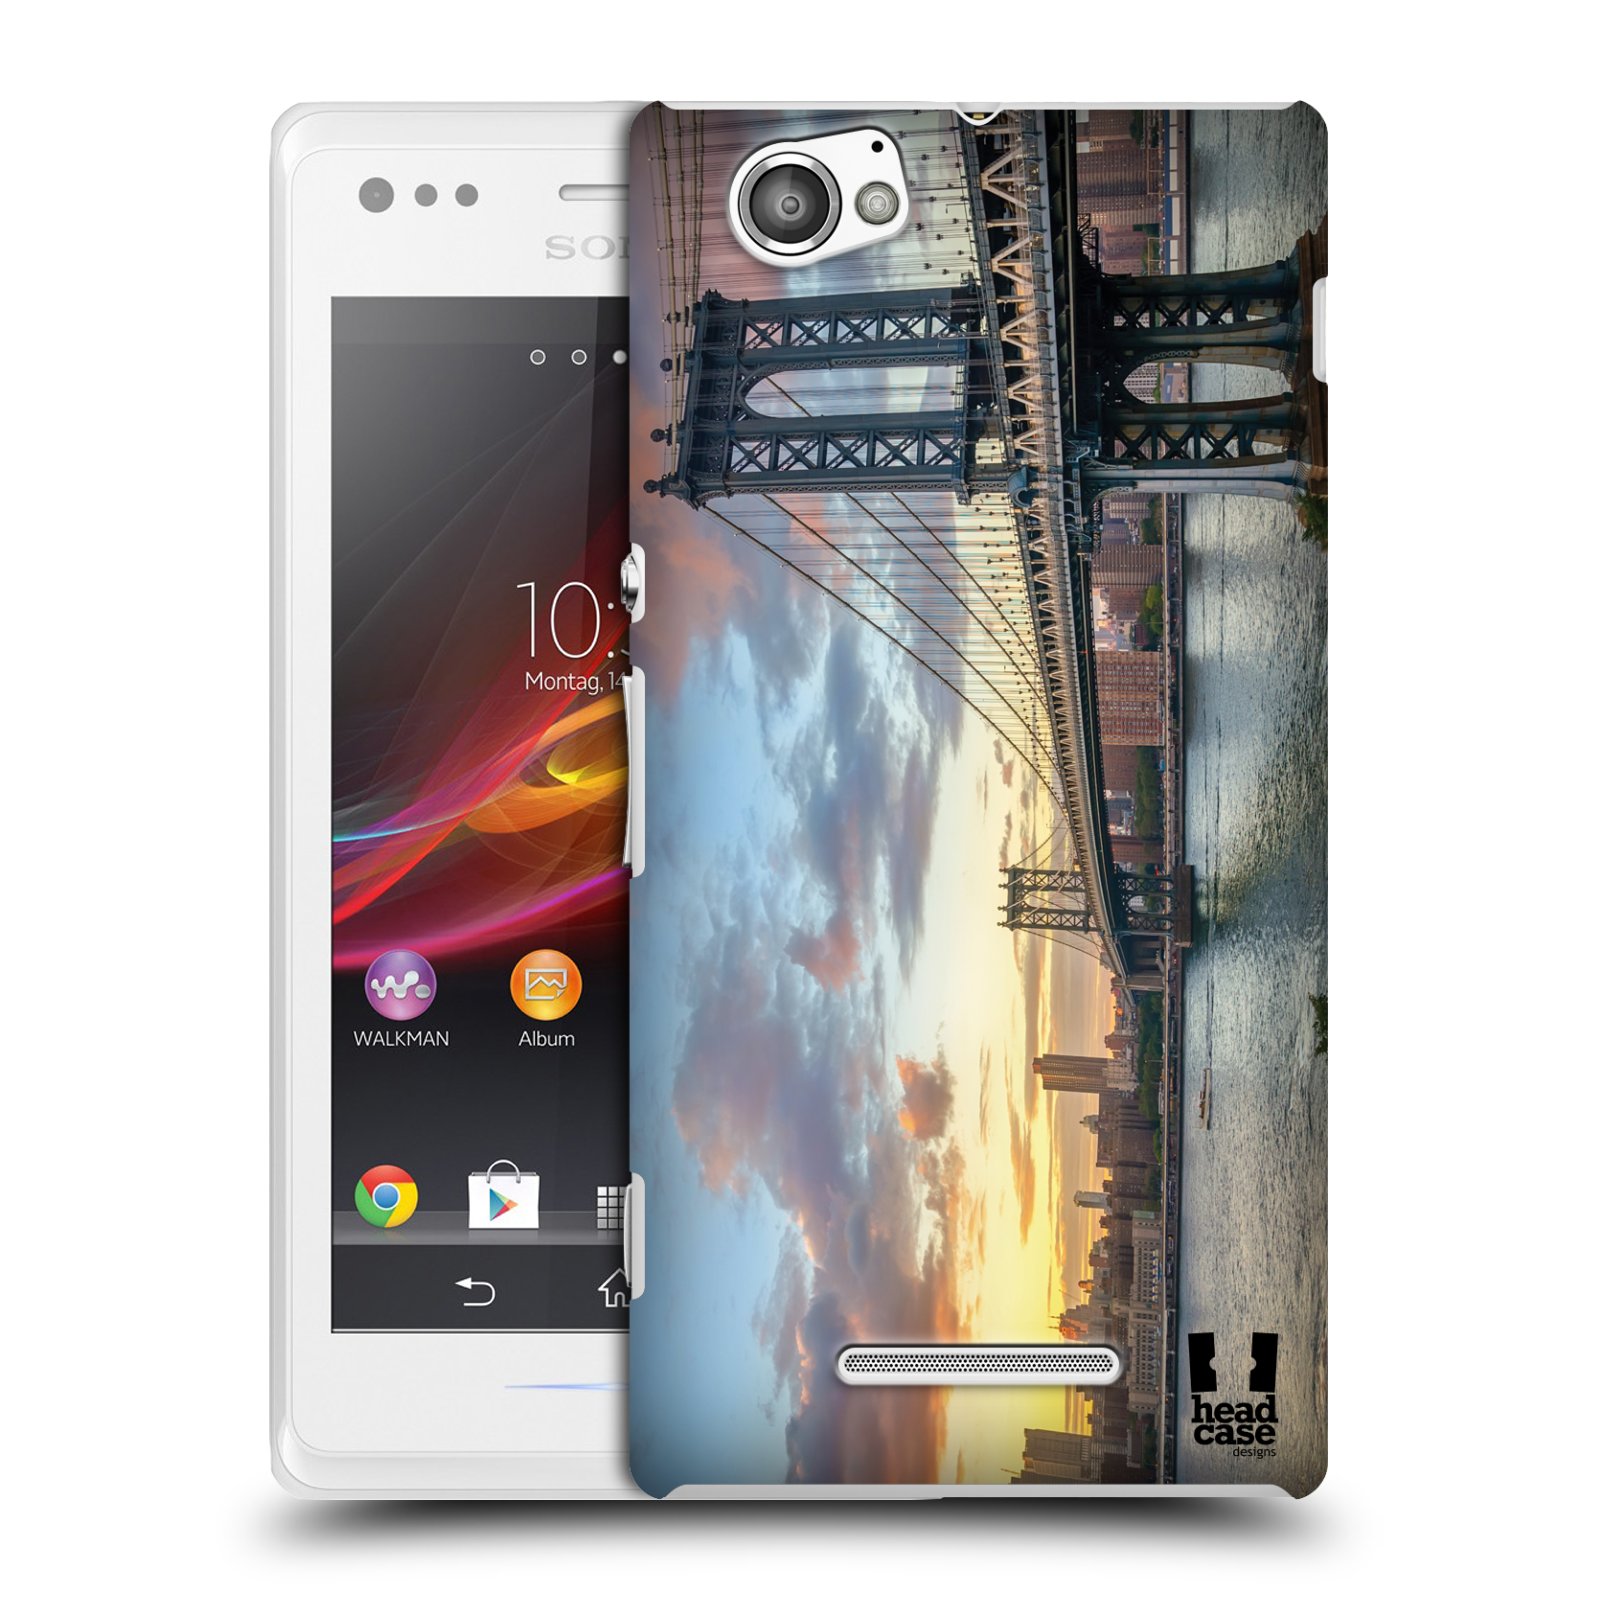 HEAD CASE plastový obal na mobil Sony Xperia M vzor Panoramata měst horizontální foto MANHATTAN MOST ZÁPAD SLUNCE